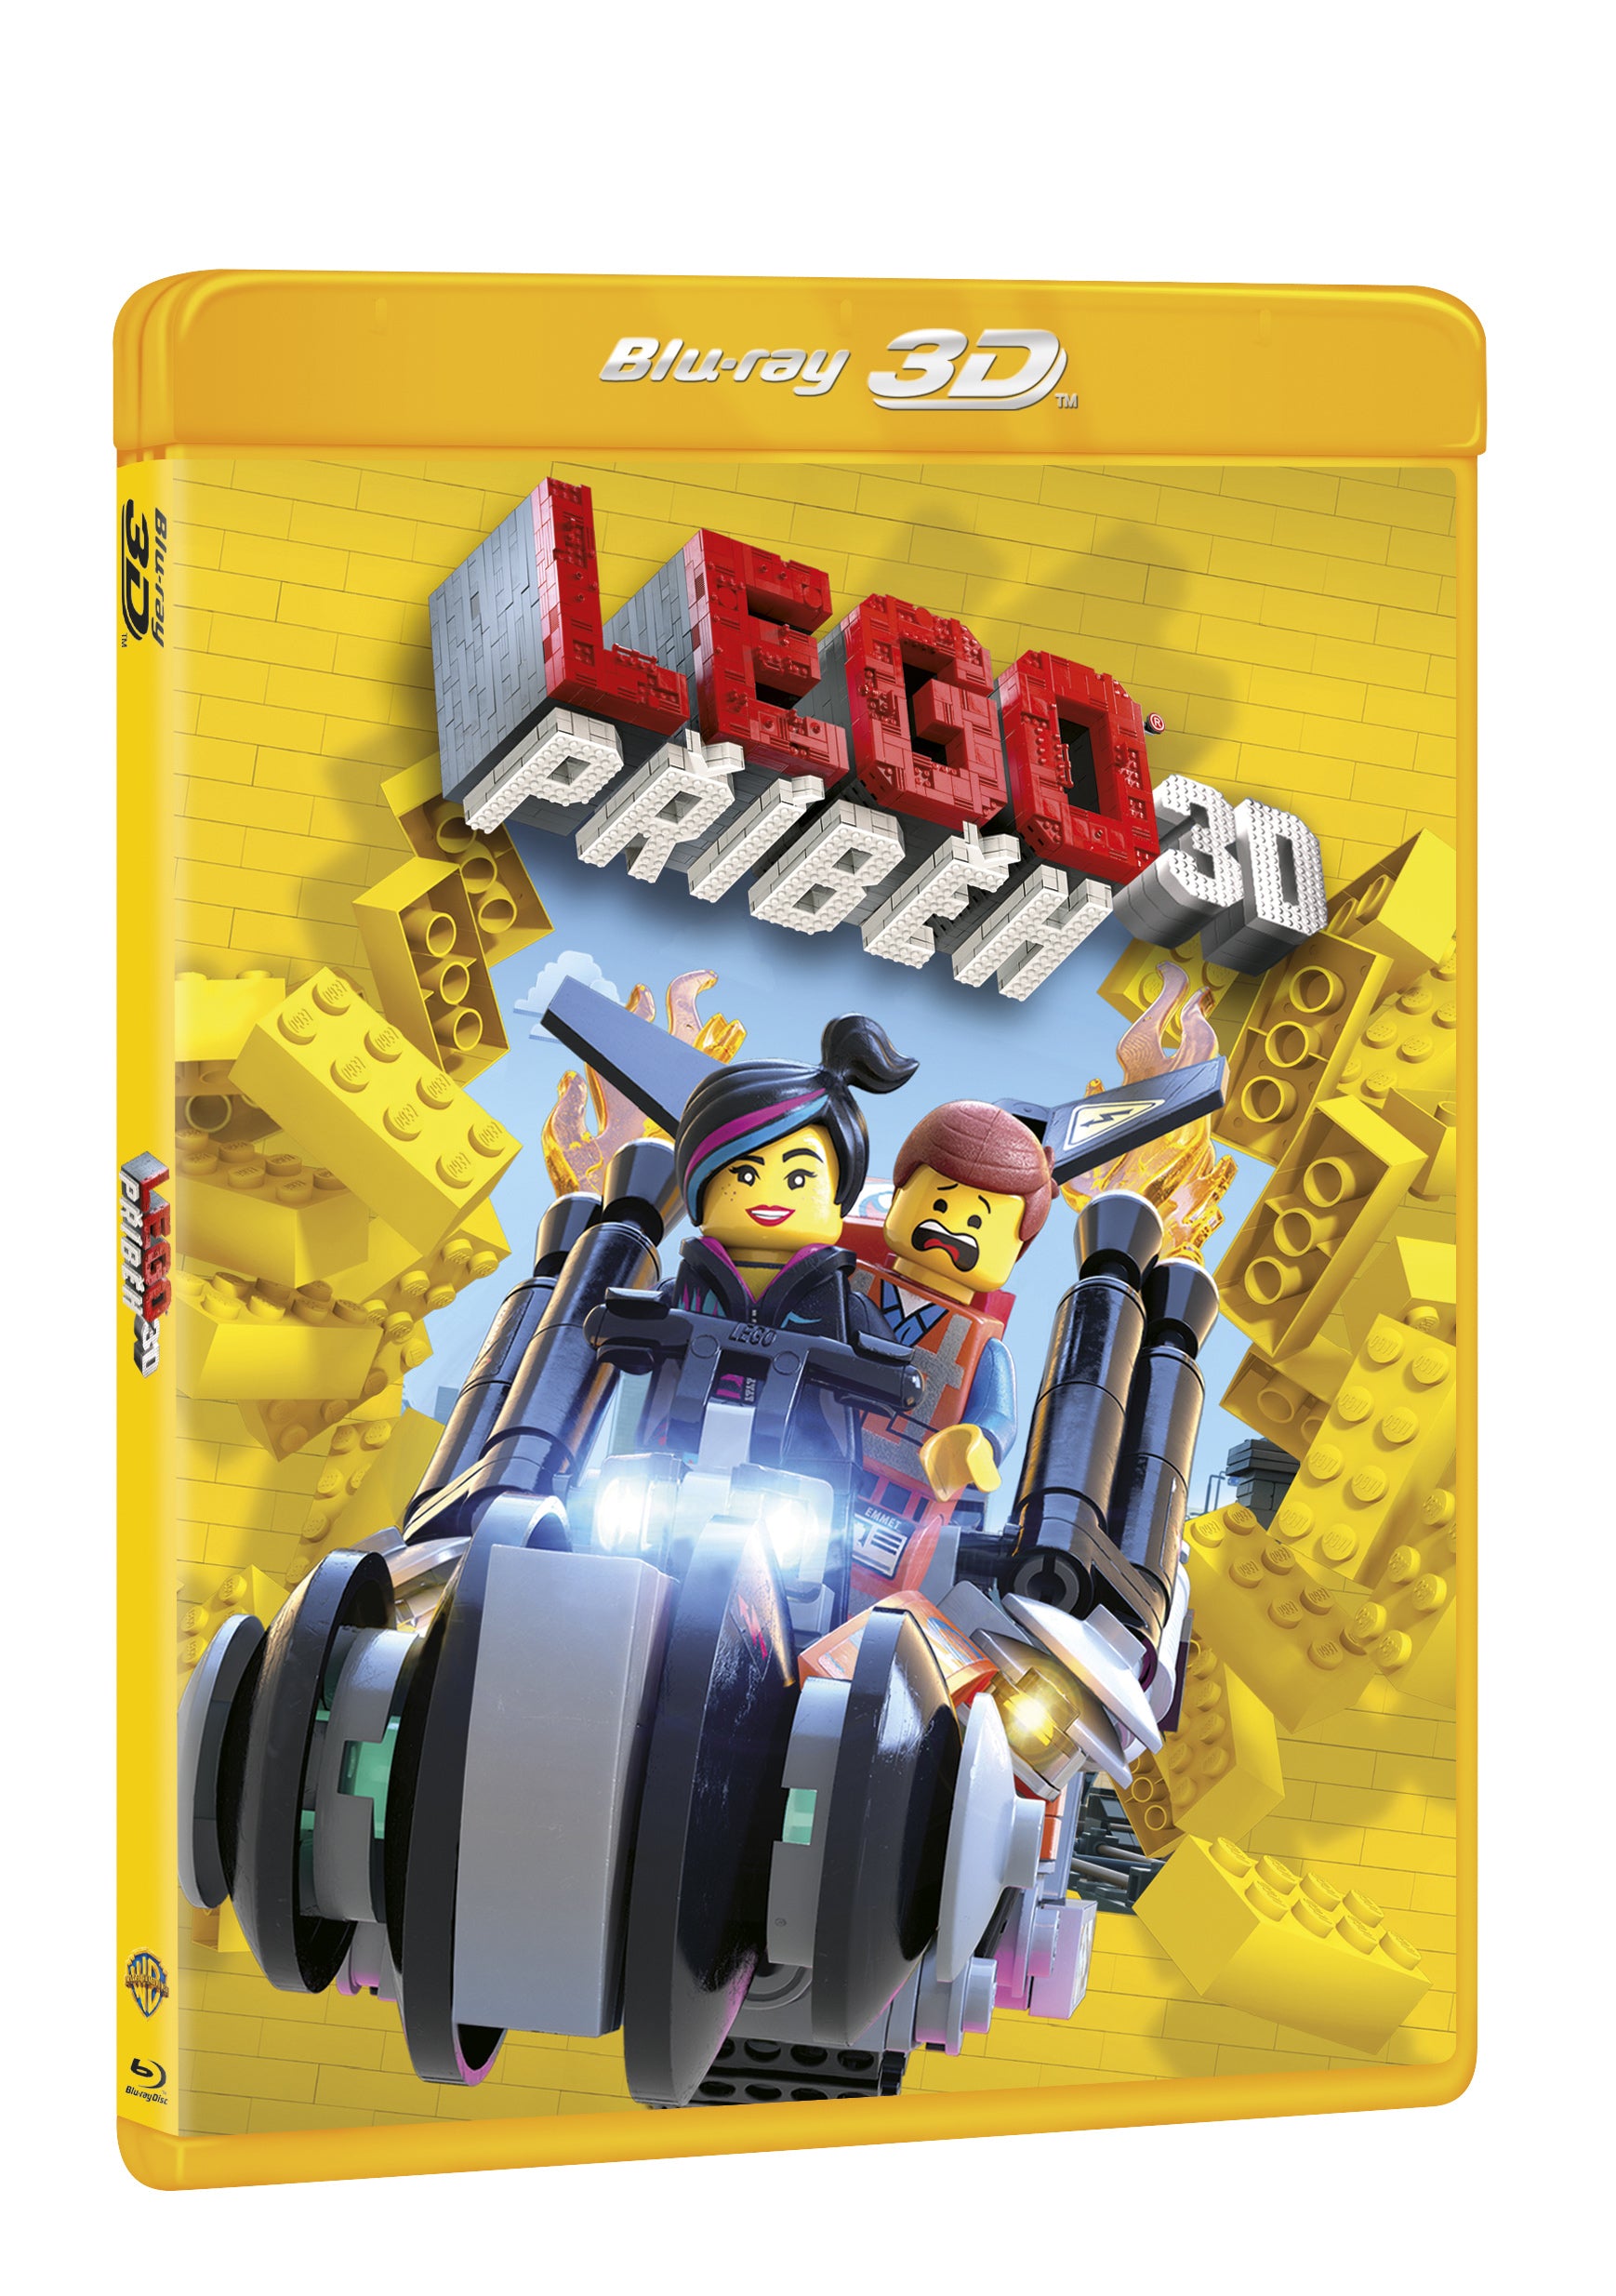 Lego pribeh 2BD (3D+2D) / The Lego Movie - Czech version